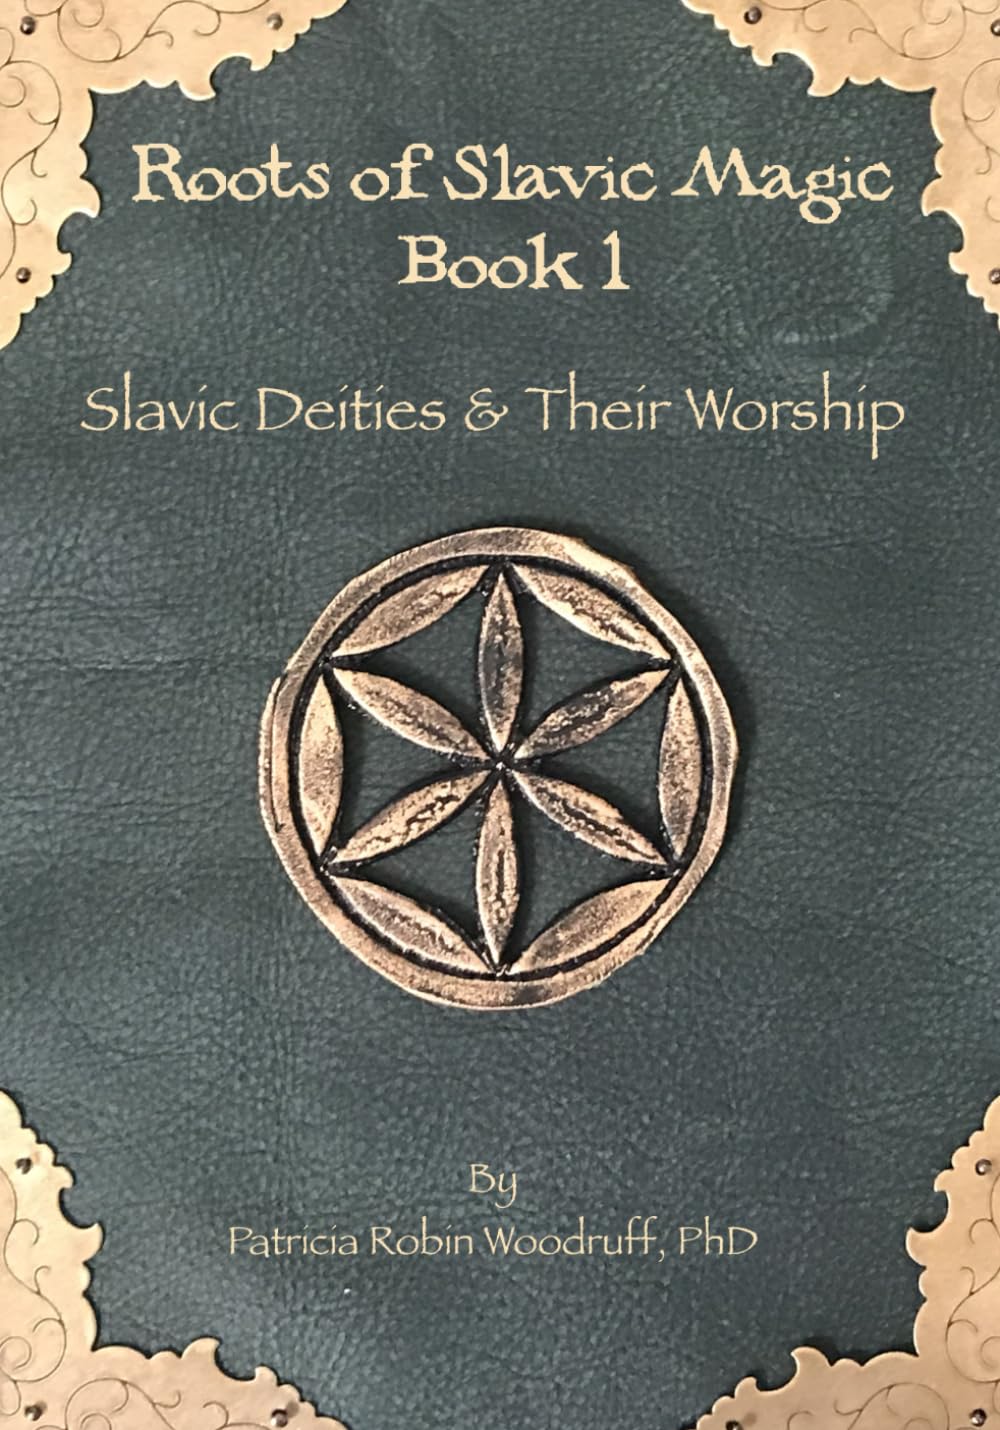 The Roots of Slavic Magic Book 1 Slavic Deities & Their Worship by Patricia Robin Woodruff, PhD. 